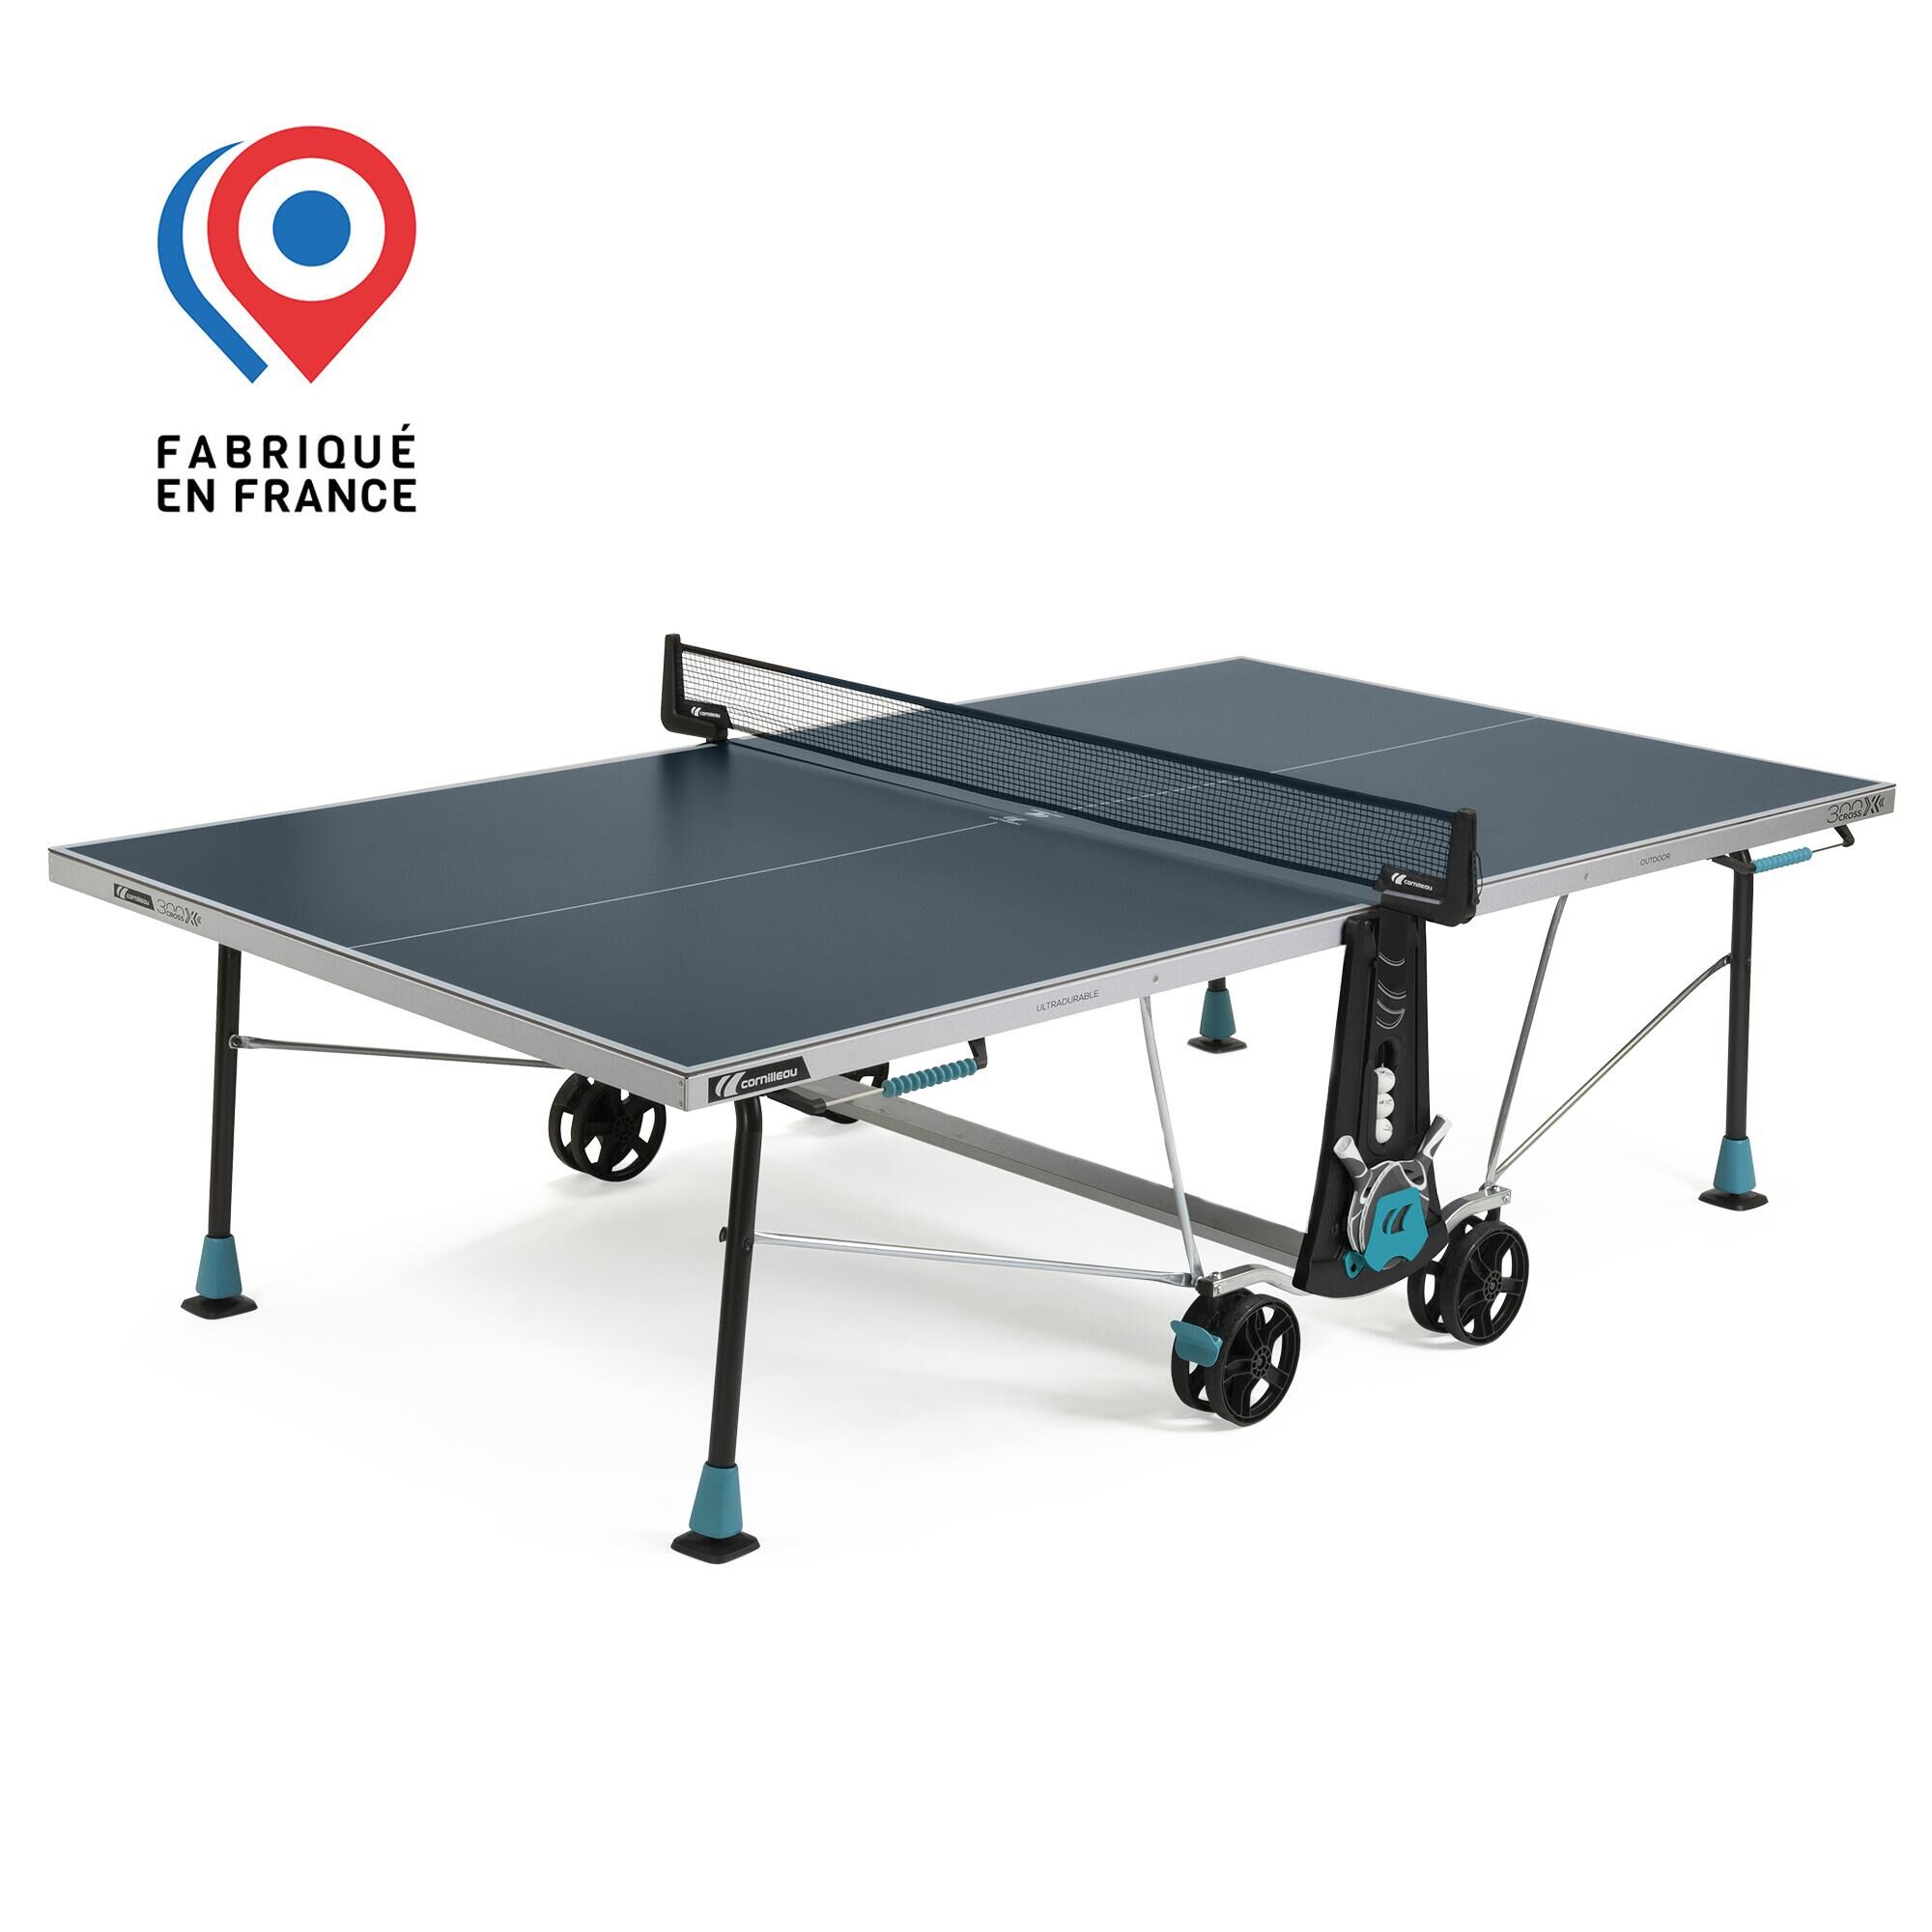 CORNILLEAU 300X Sport Outdoor Table Tennis Table - Blue